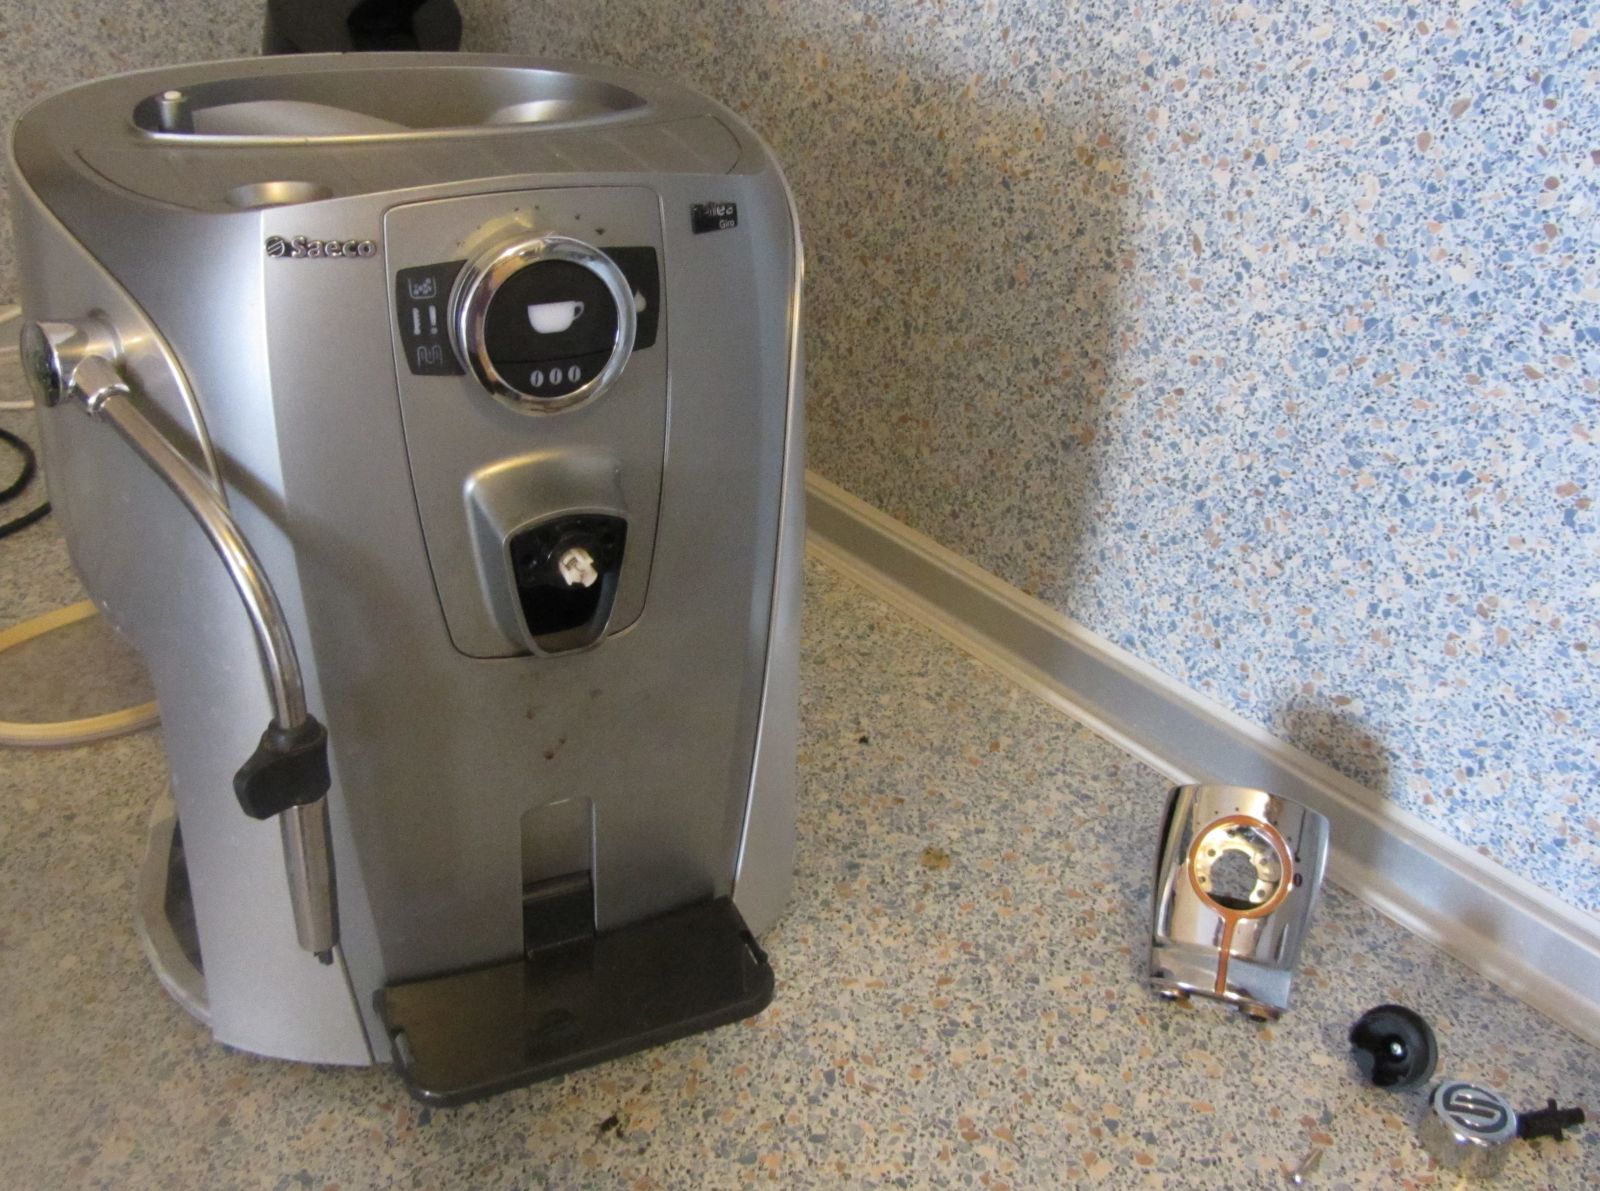 Saeco Talea automatic coffee machine teardown and analysis